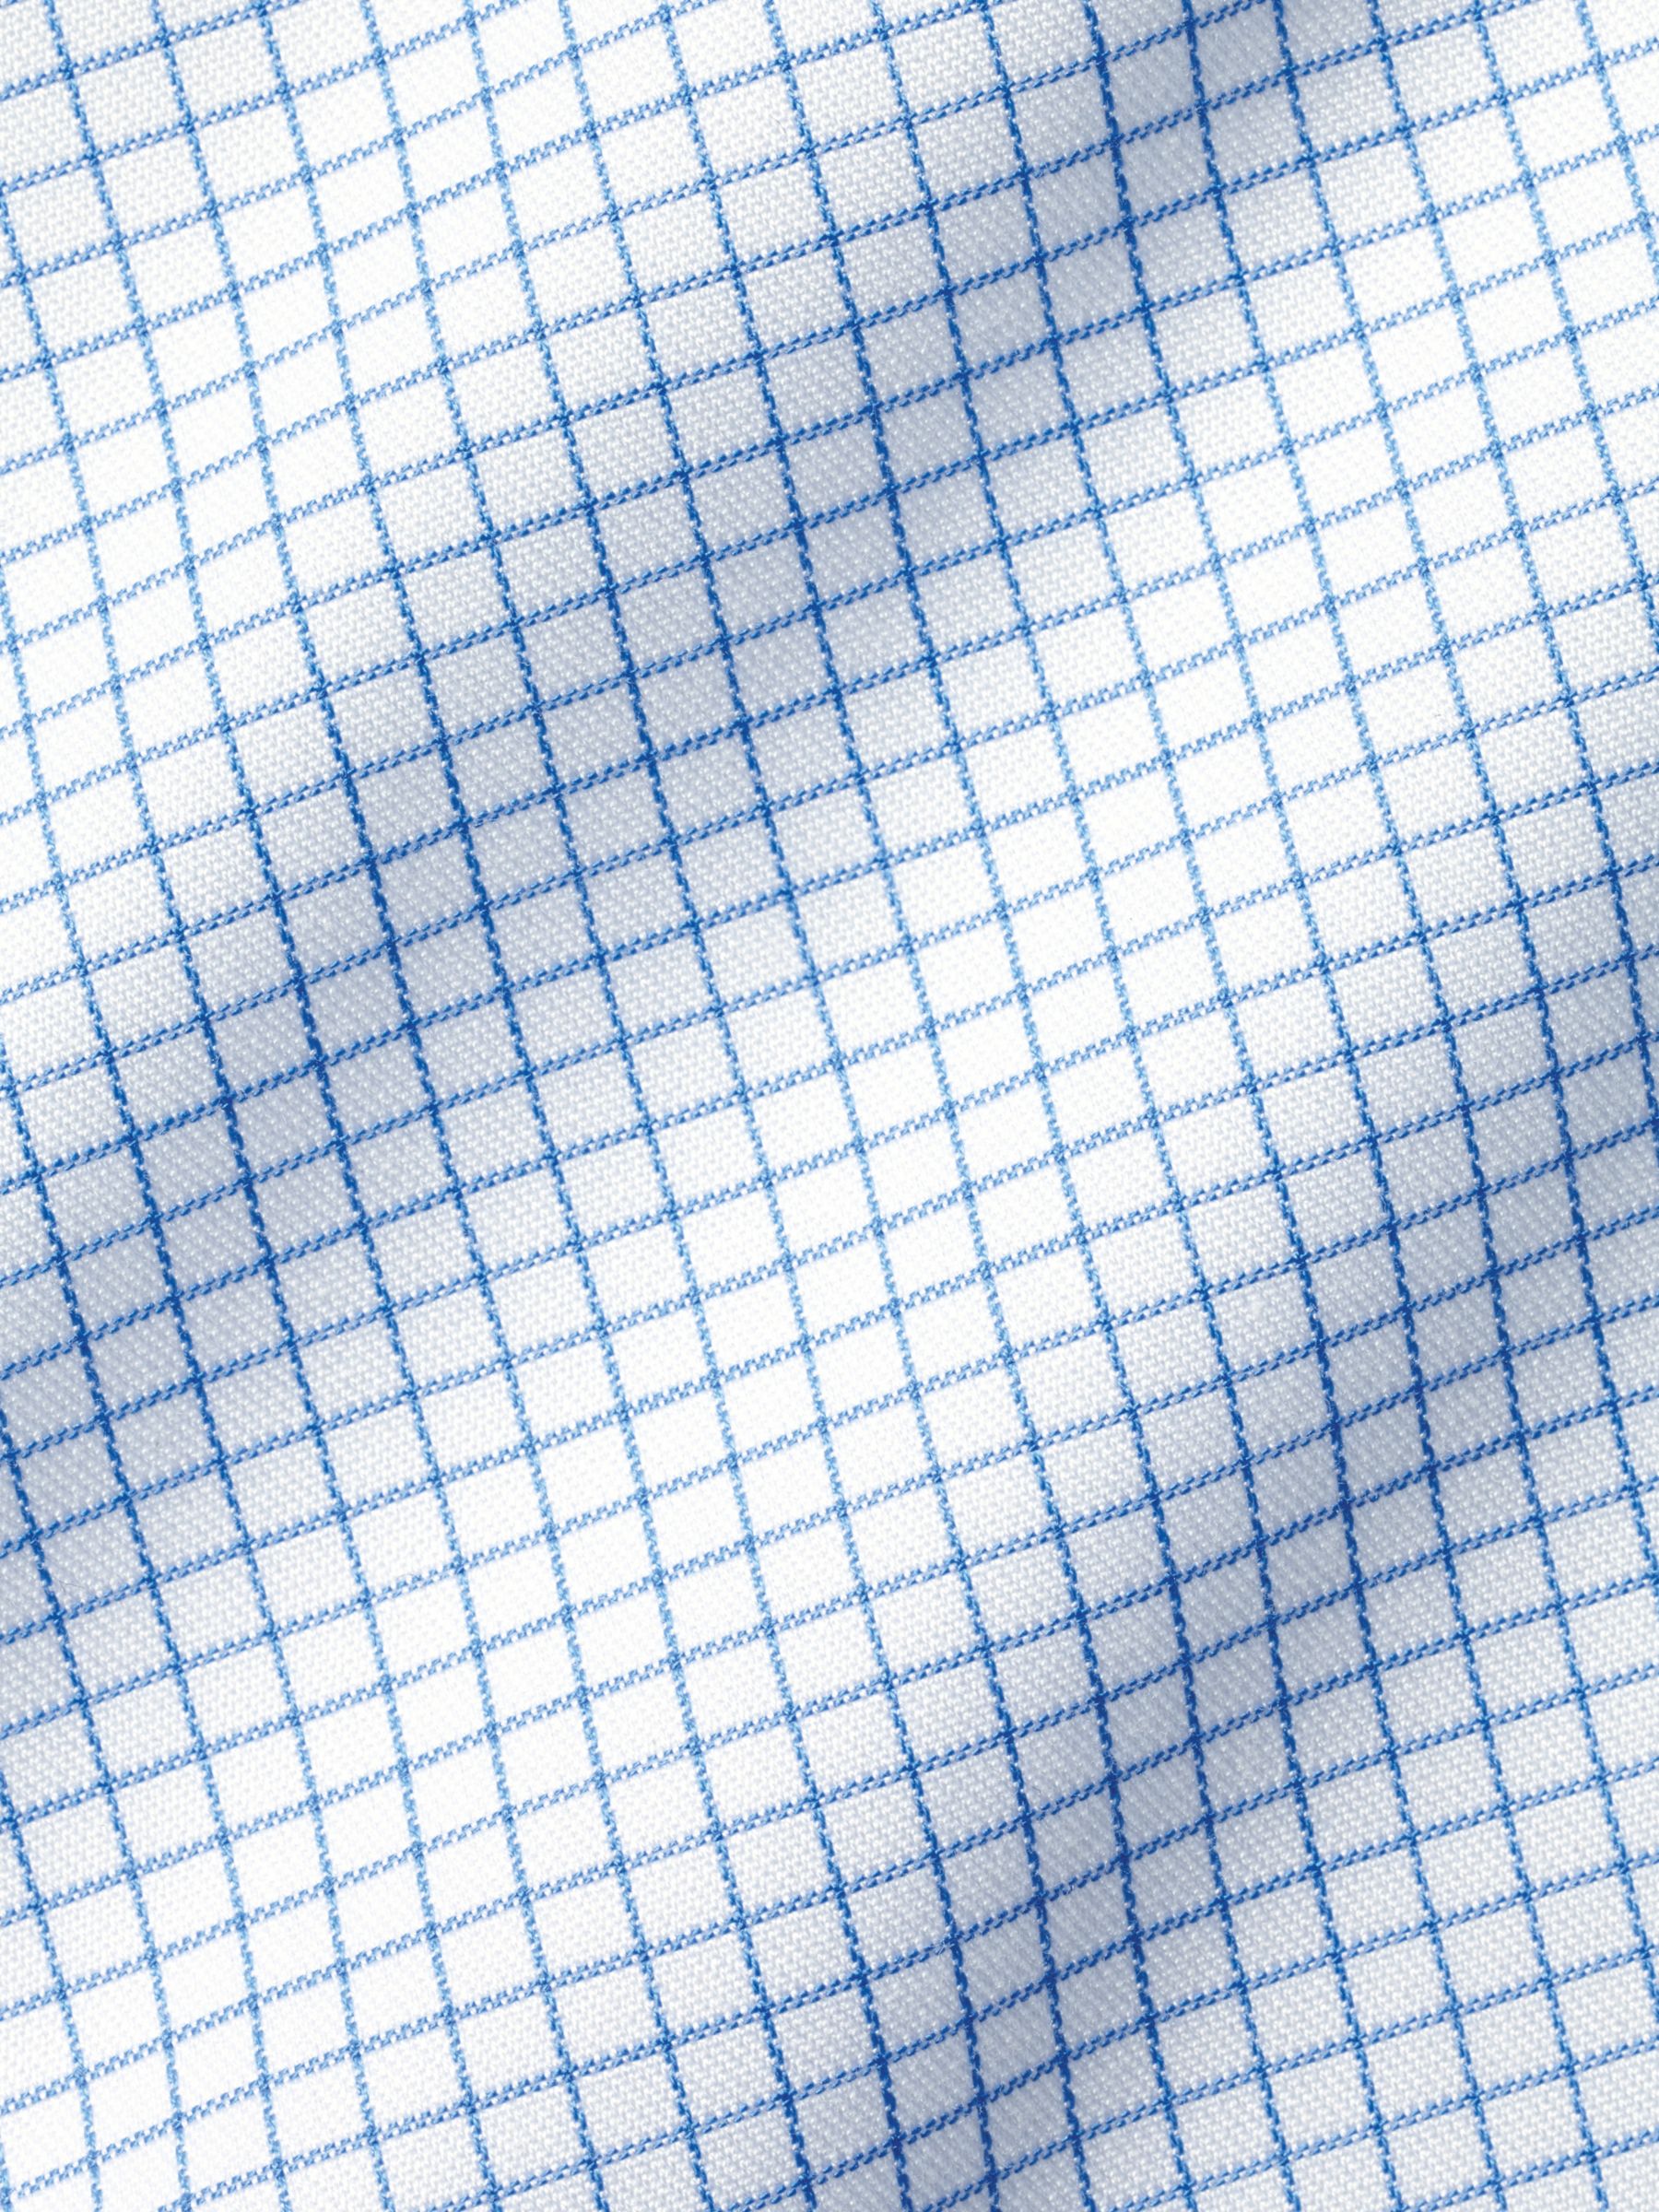 Charles Tyrwhitt Classic Collar Non-Iron Twill Mini Grid Slim Fit Shirt, Cornflower Blue, 15.5 34